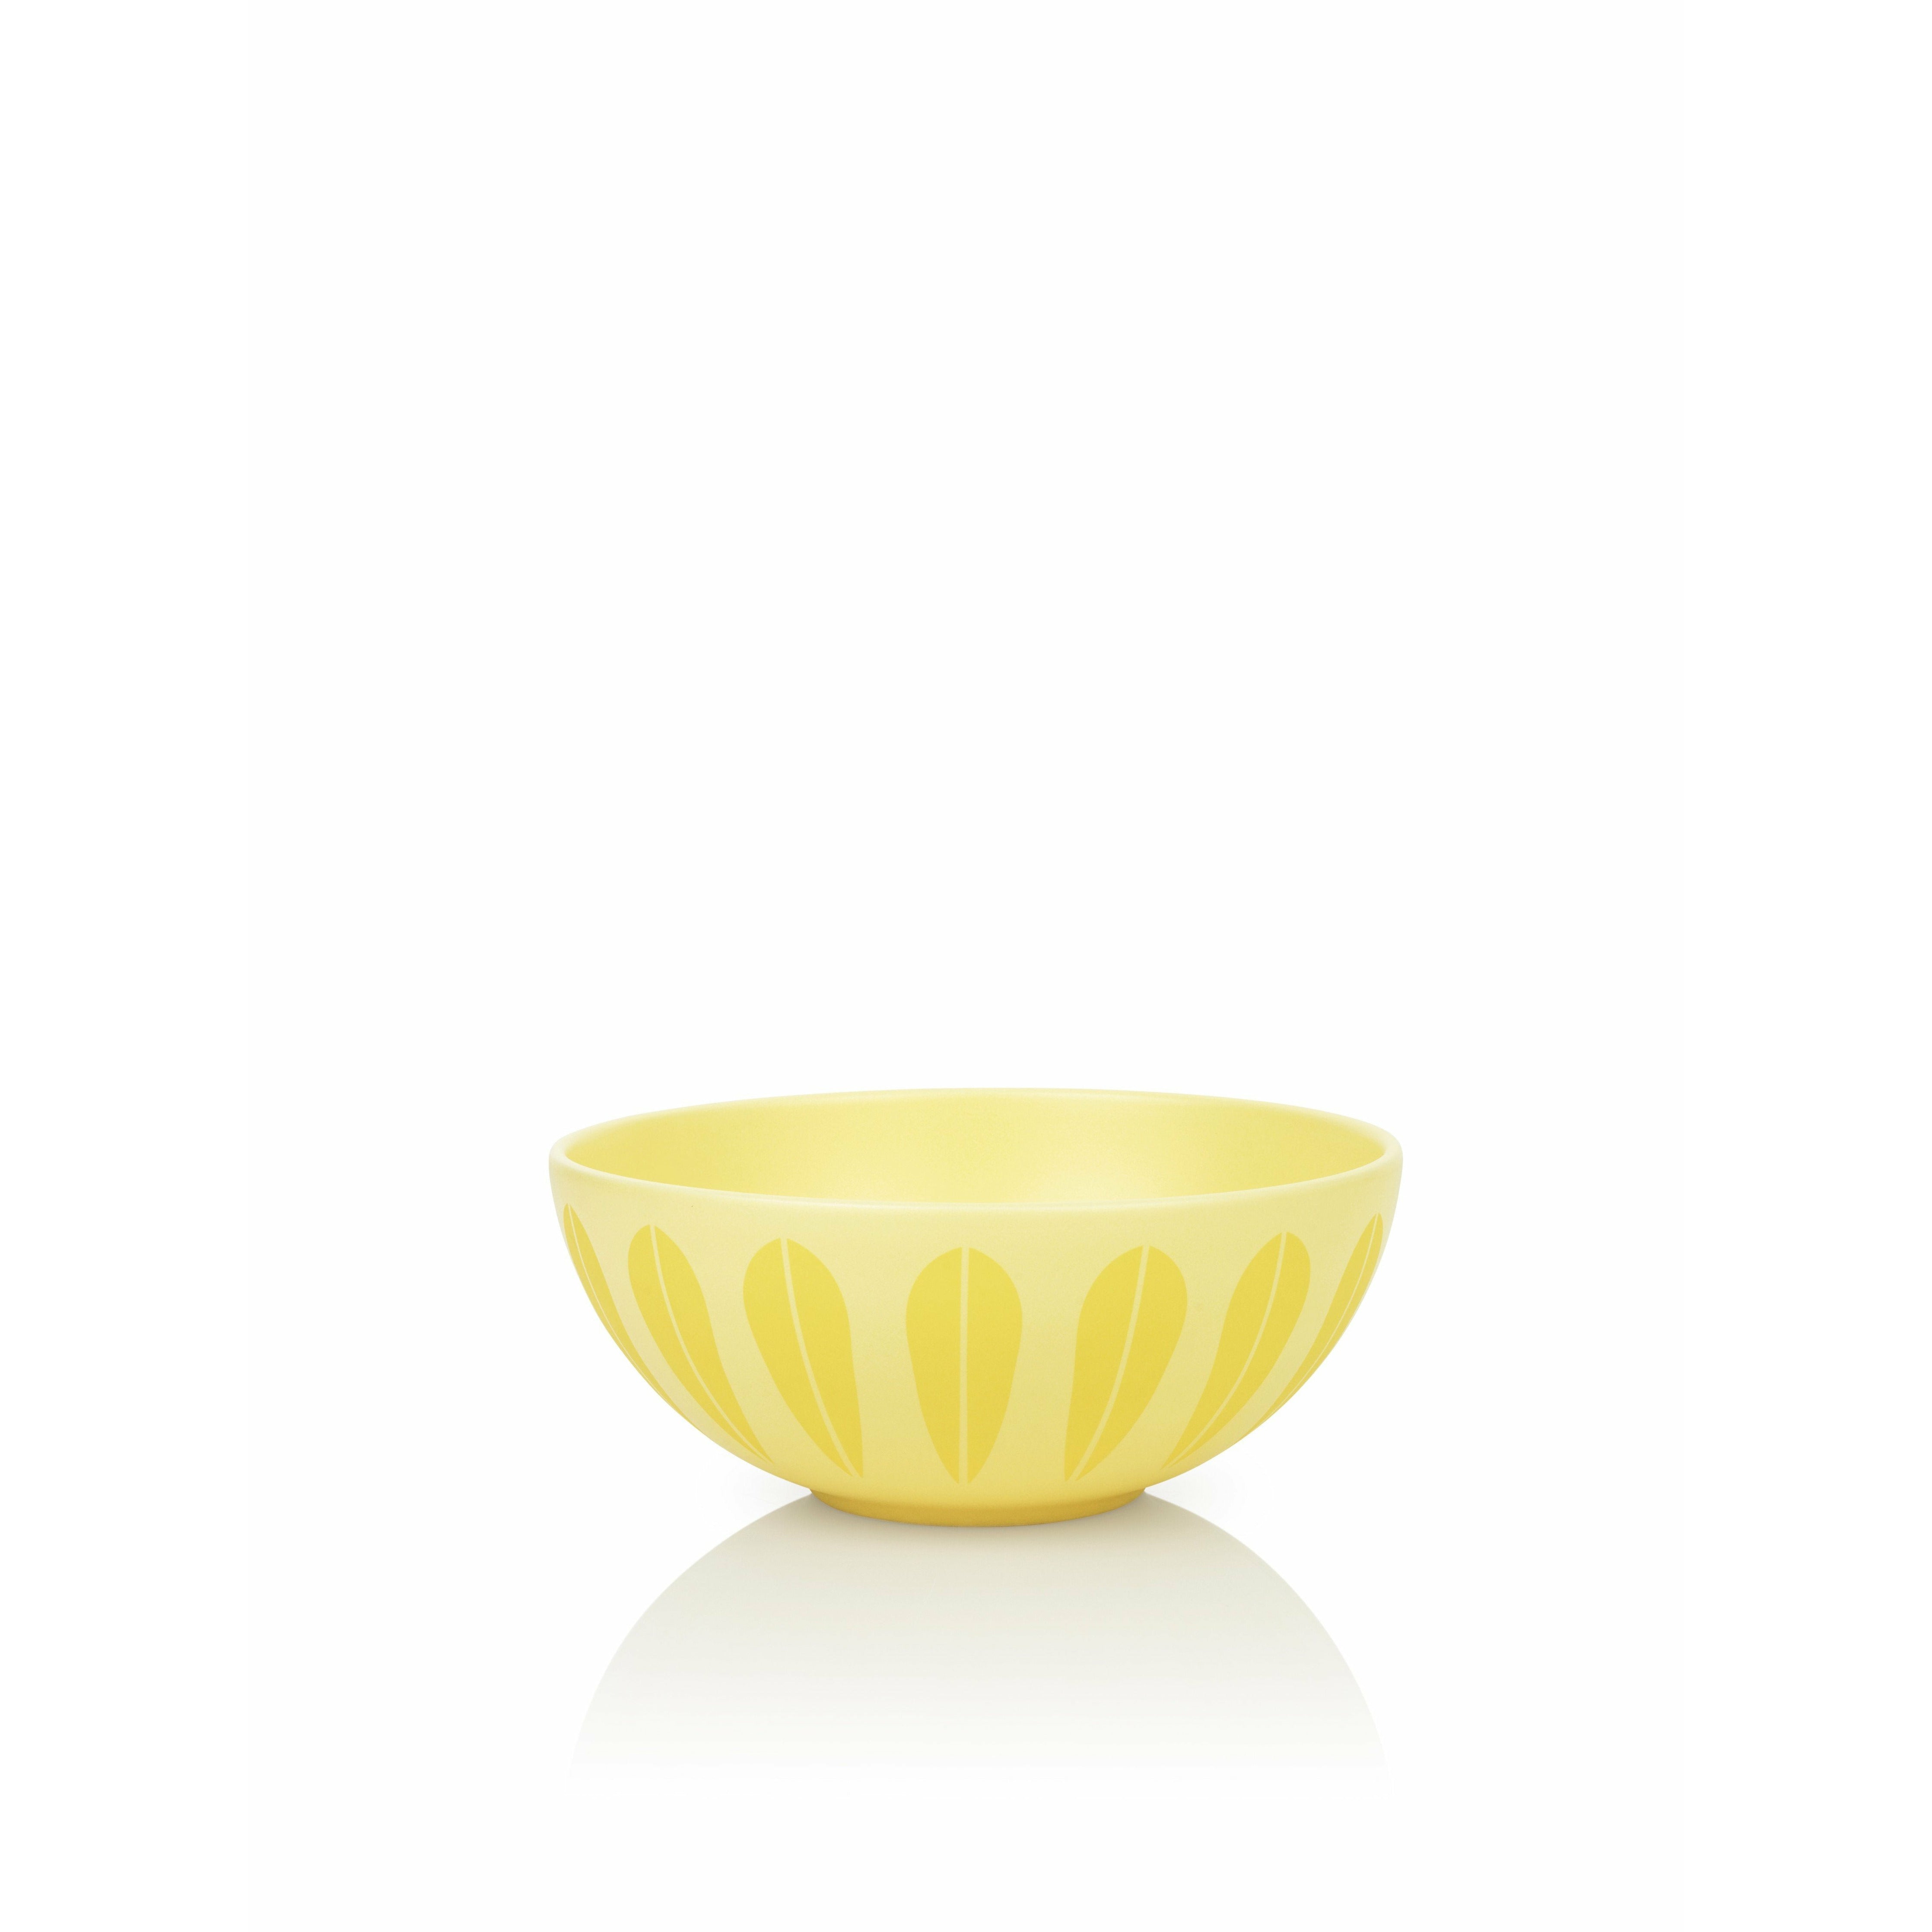 Lucie Kaas Arne Clausen Lotus Bowl gul, ø24 cm